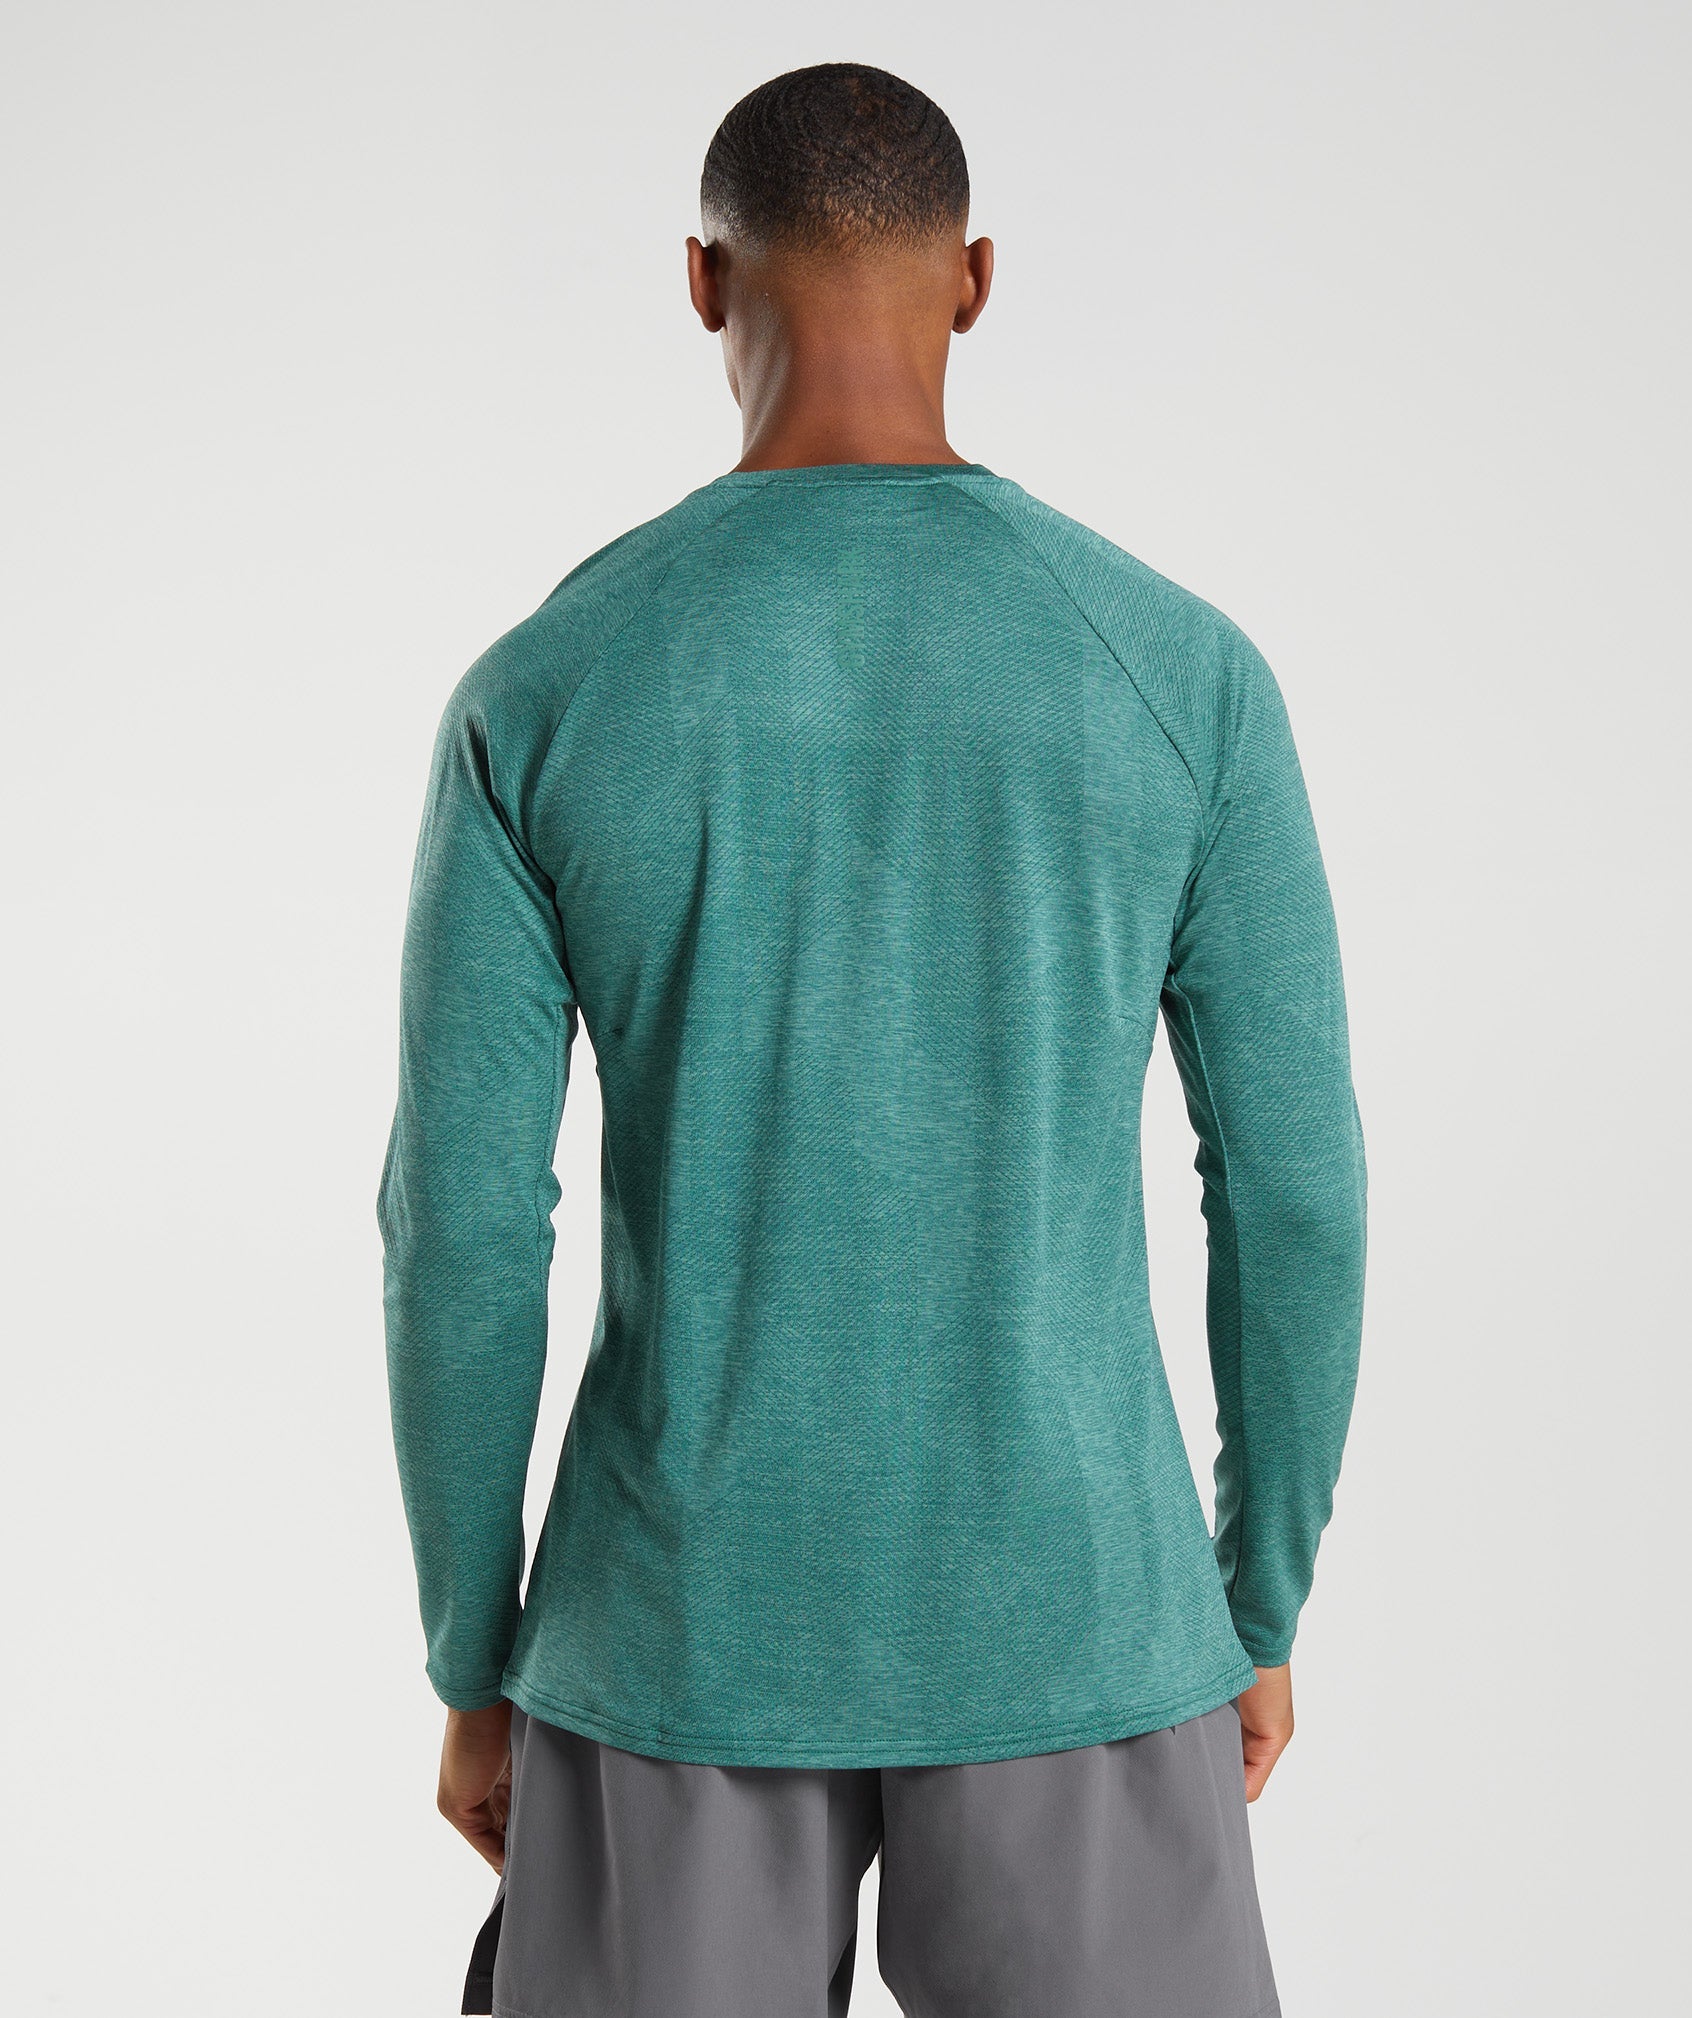 Apex Long Sleeve T-Shirt in Woodland Green/Hoya Green